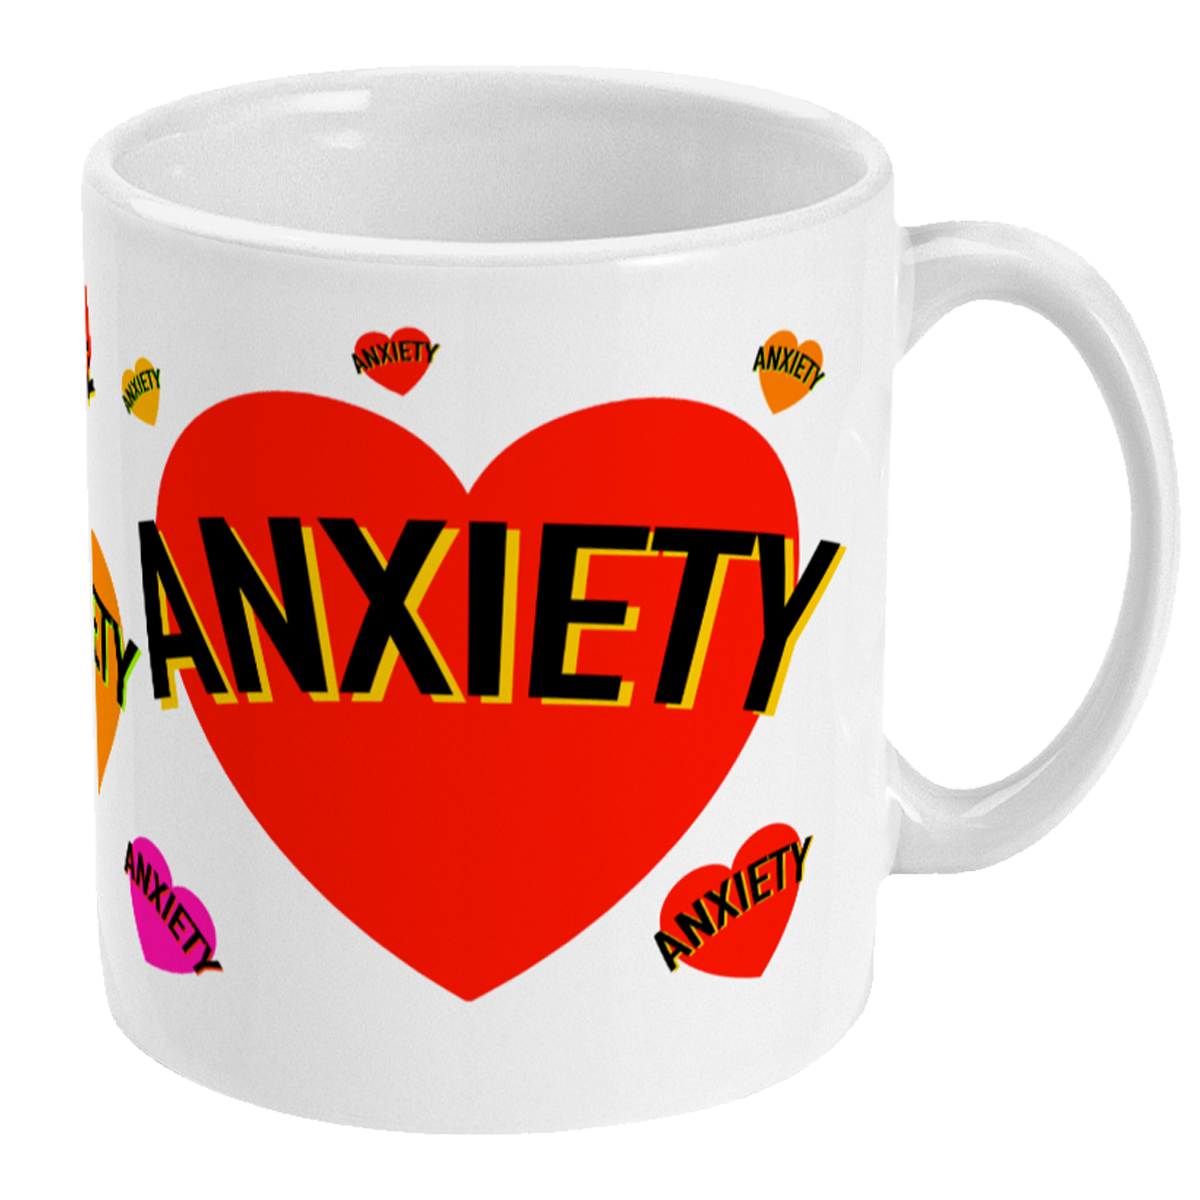 Love Anxiety mok